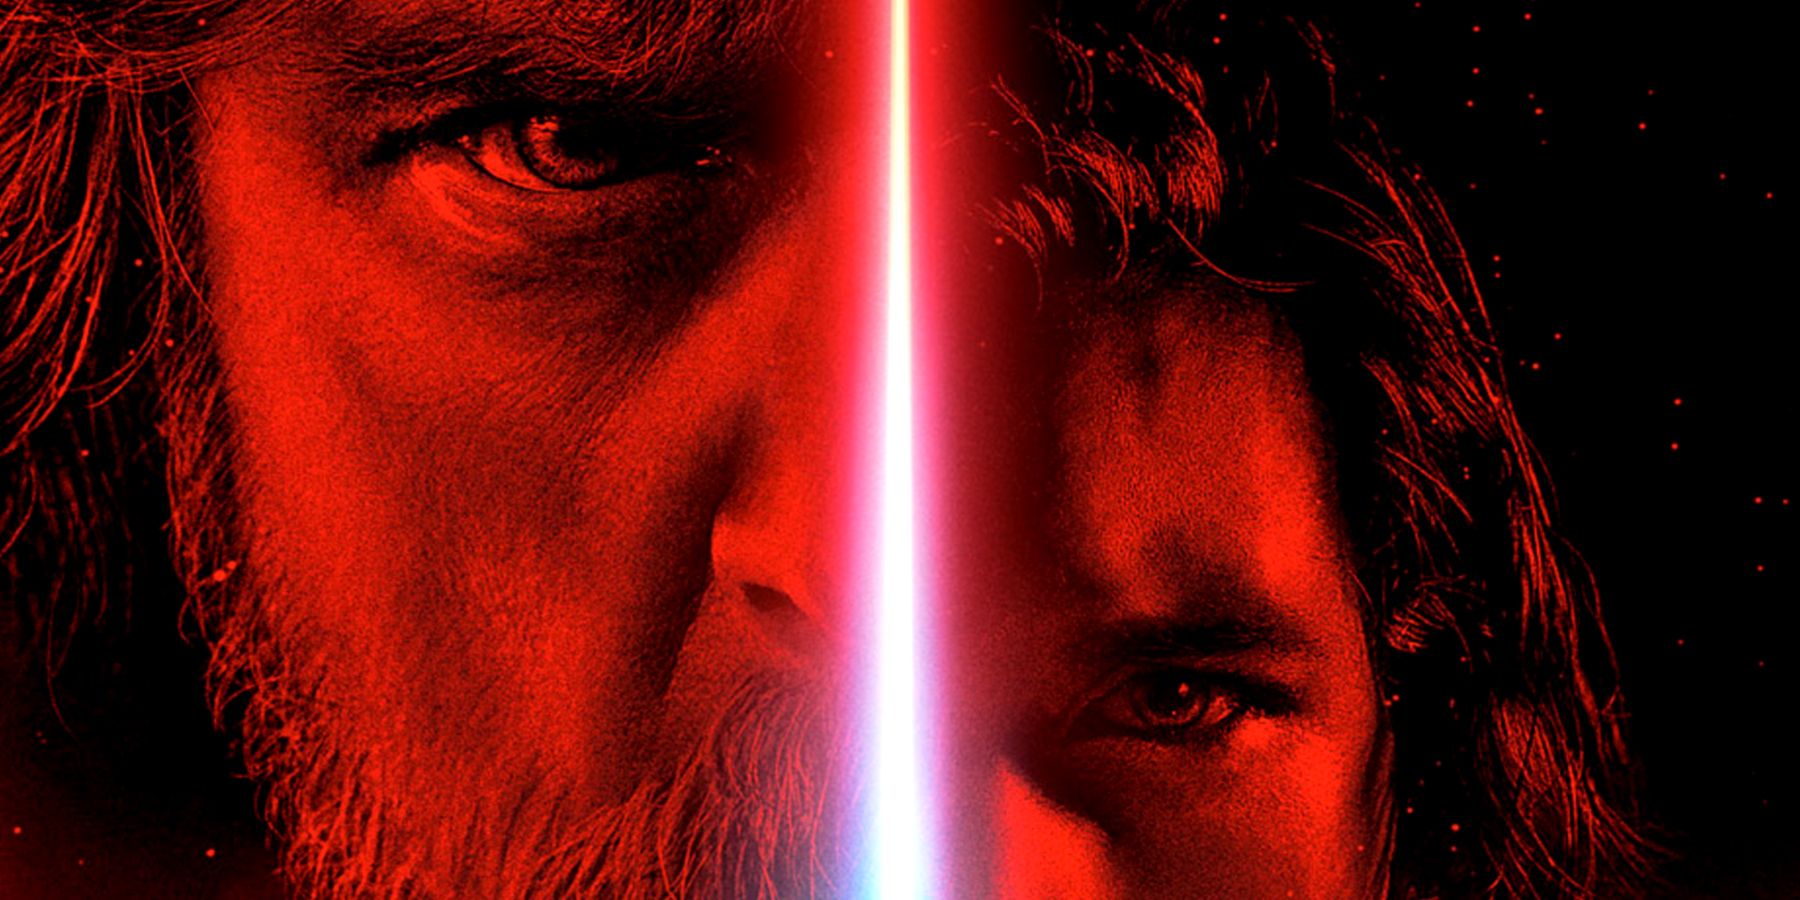 Star Wars: The Last Jedi Has Saga's Lowest Audience Score